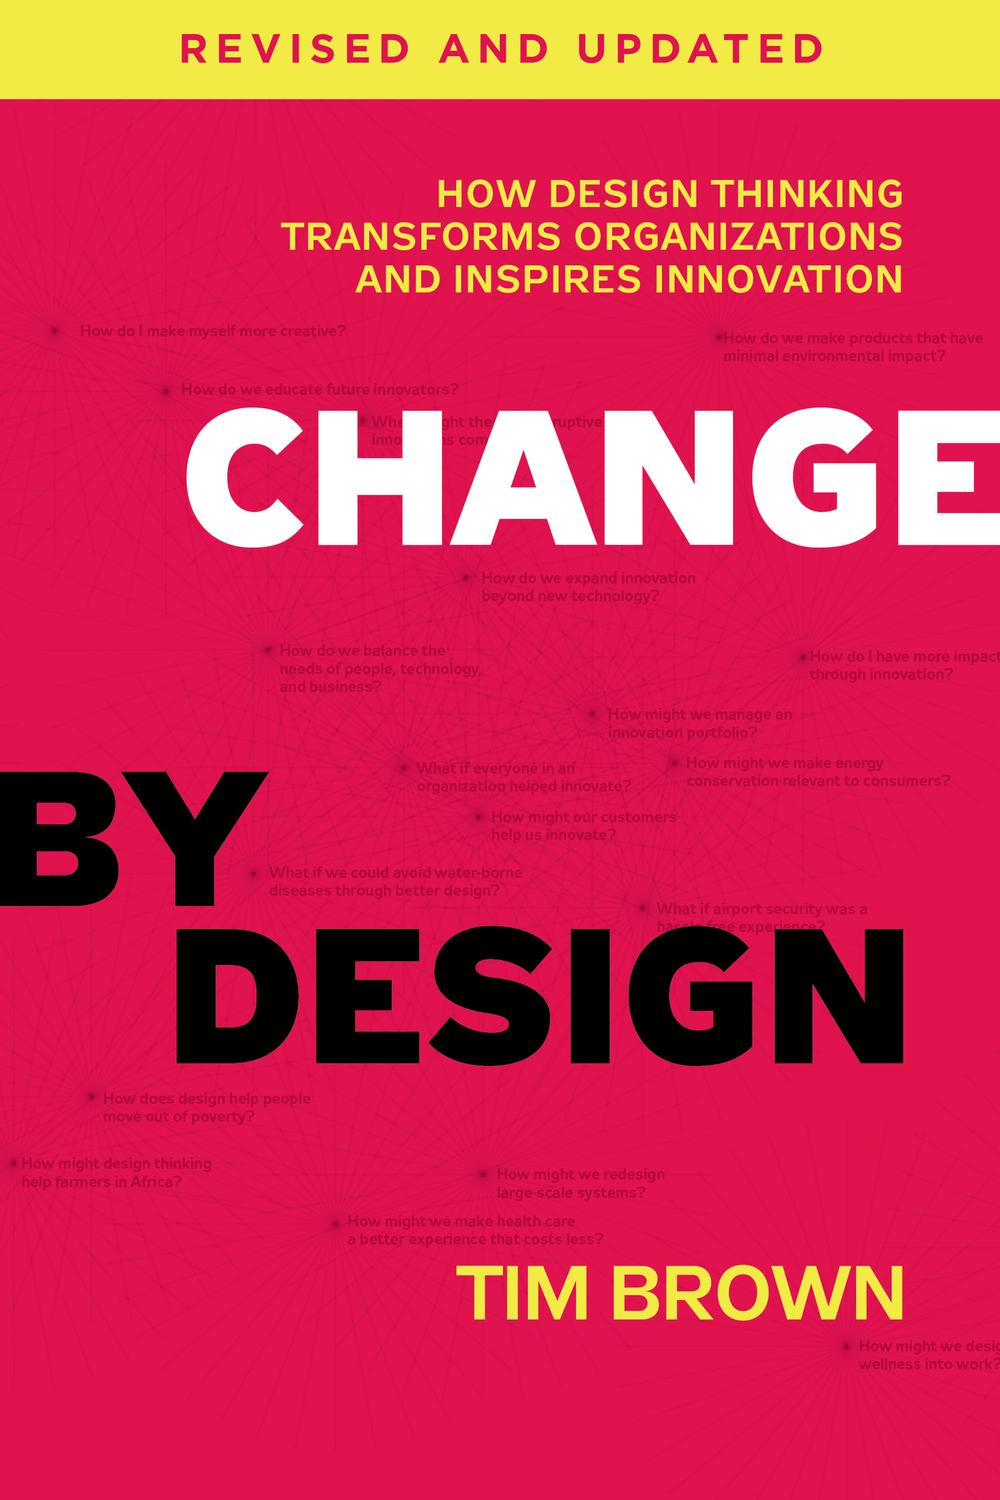 indhente angst tæt PDF] Change by Design, Revised and Updated by Tim Brown eBook | Perlego